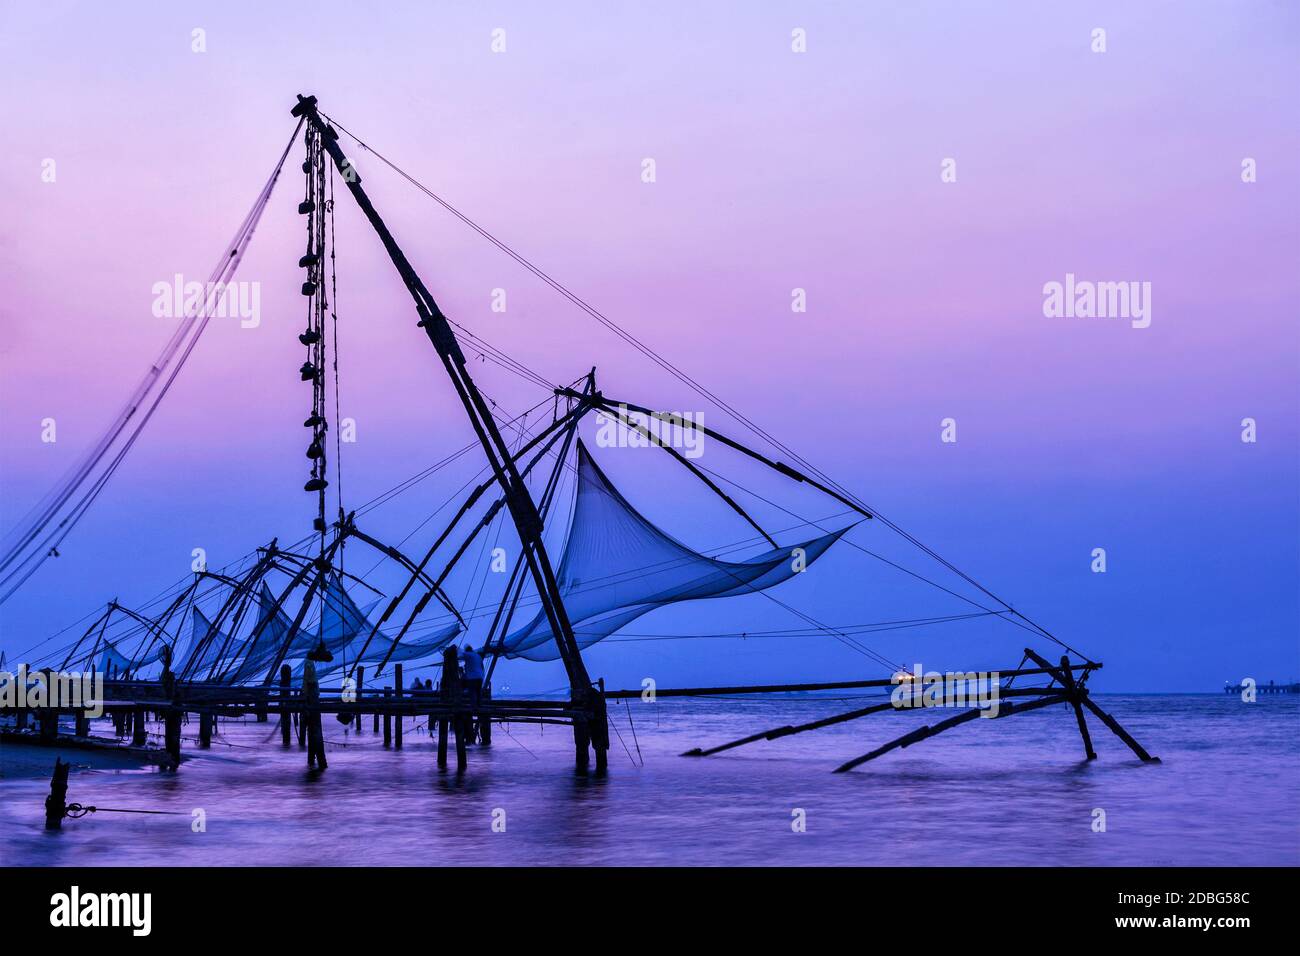 Kochi chinesische Fischnetze bei Sonnenuntergang in Fort Kochin, Kochi, Kerala, Indien Stockfoto